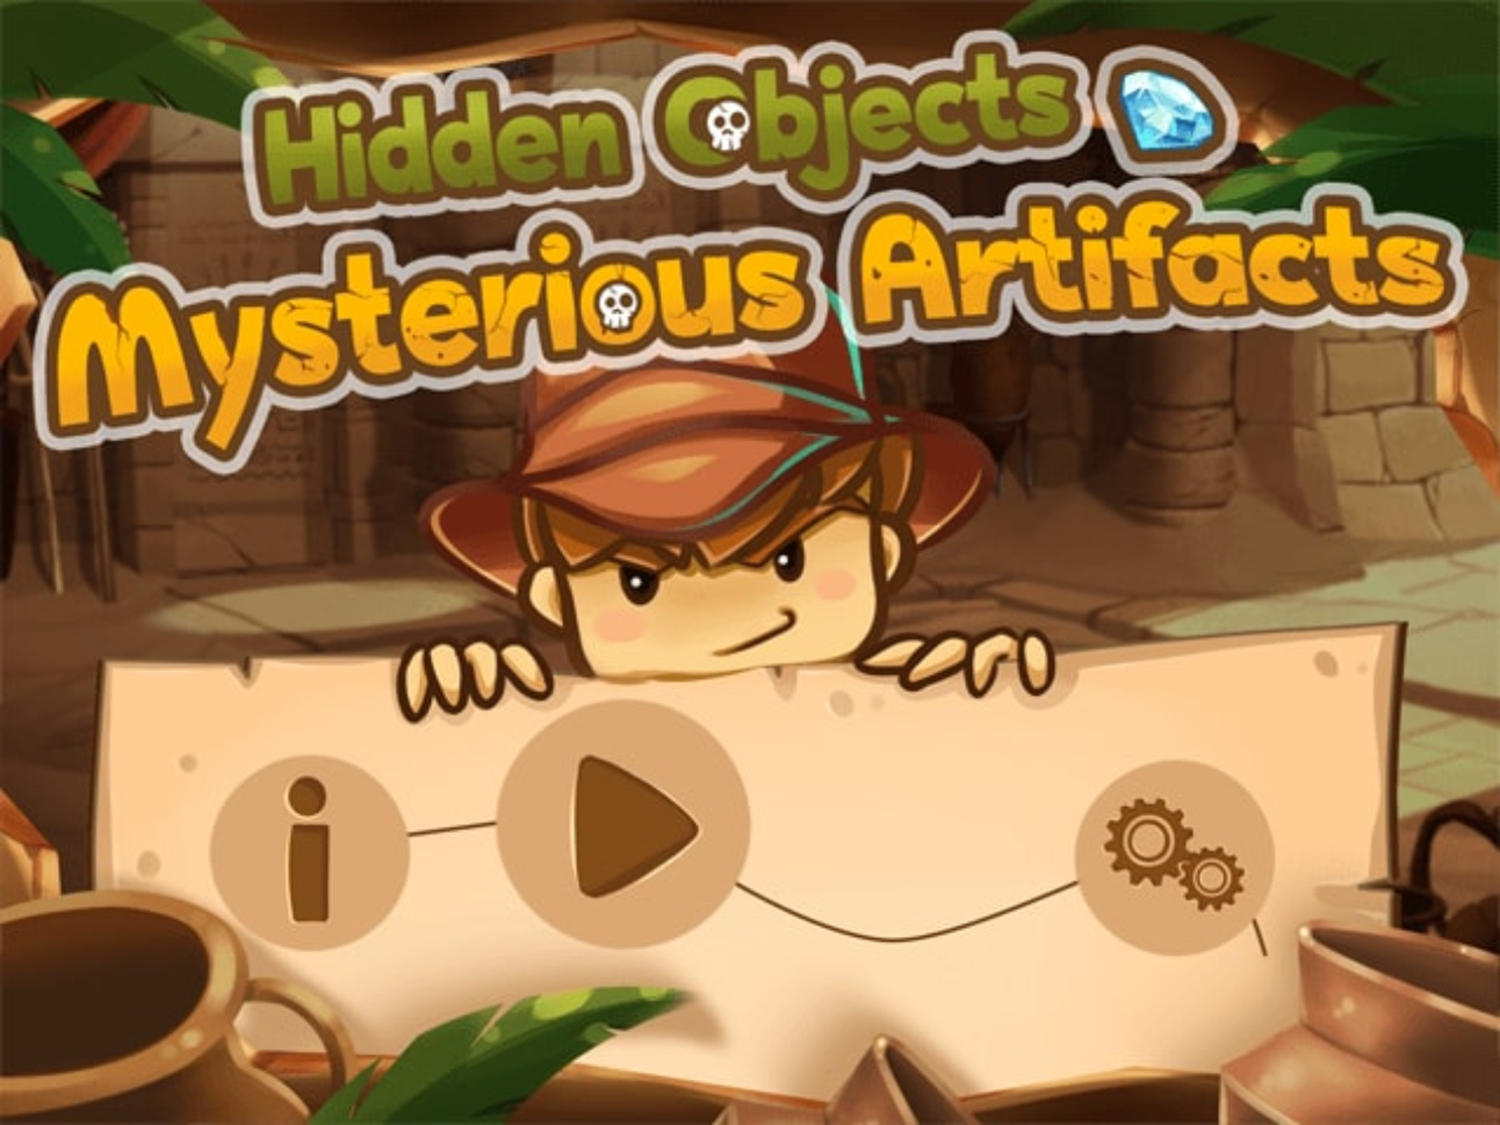 Hidden Objects Mysterious Artifacts Game Welcome Screen Screenshot.